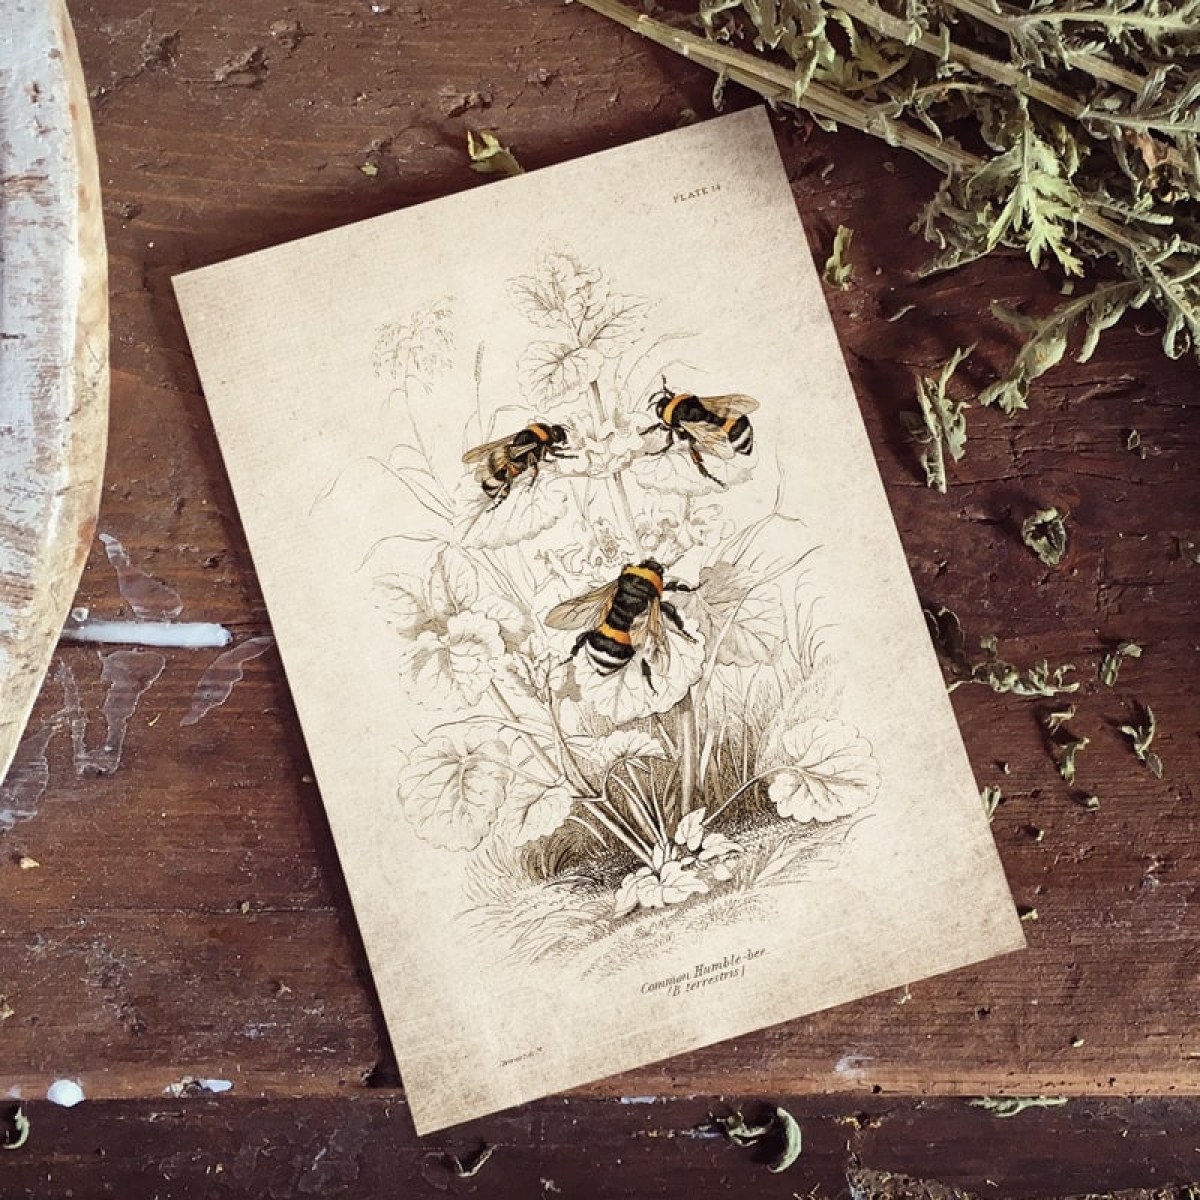 Vintage Entomology Giclee Print (Bee Scene 1925)